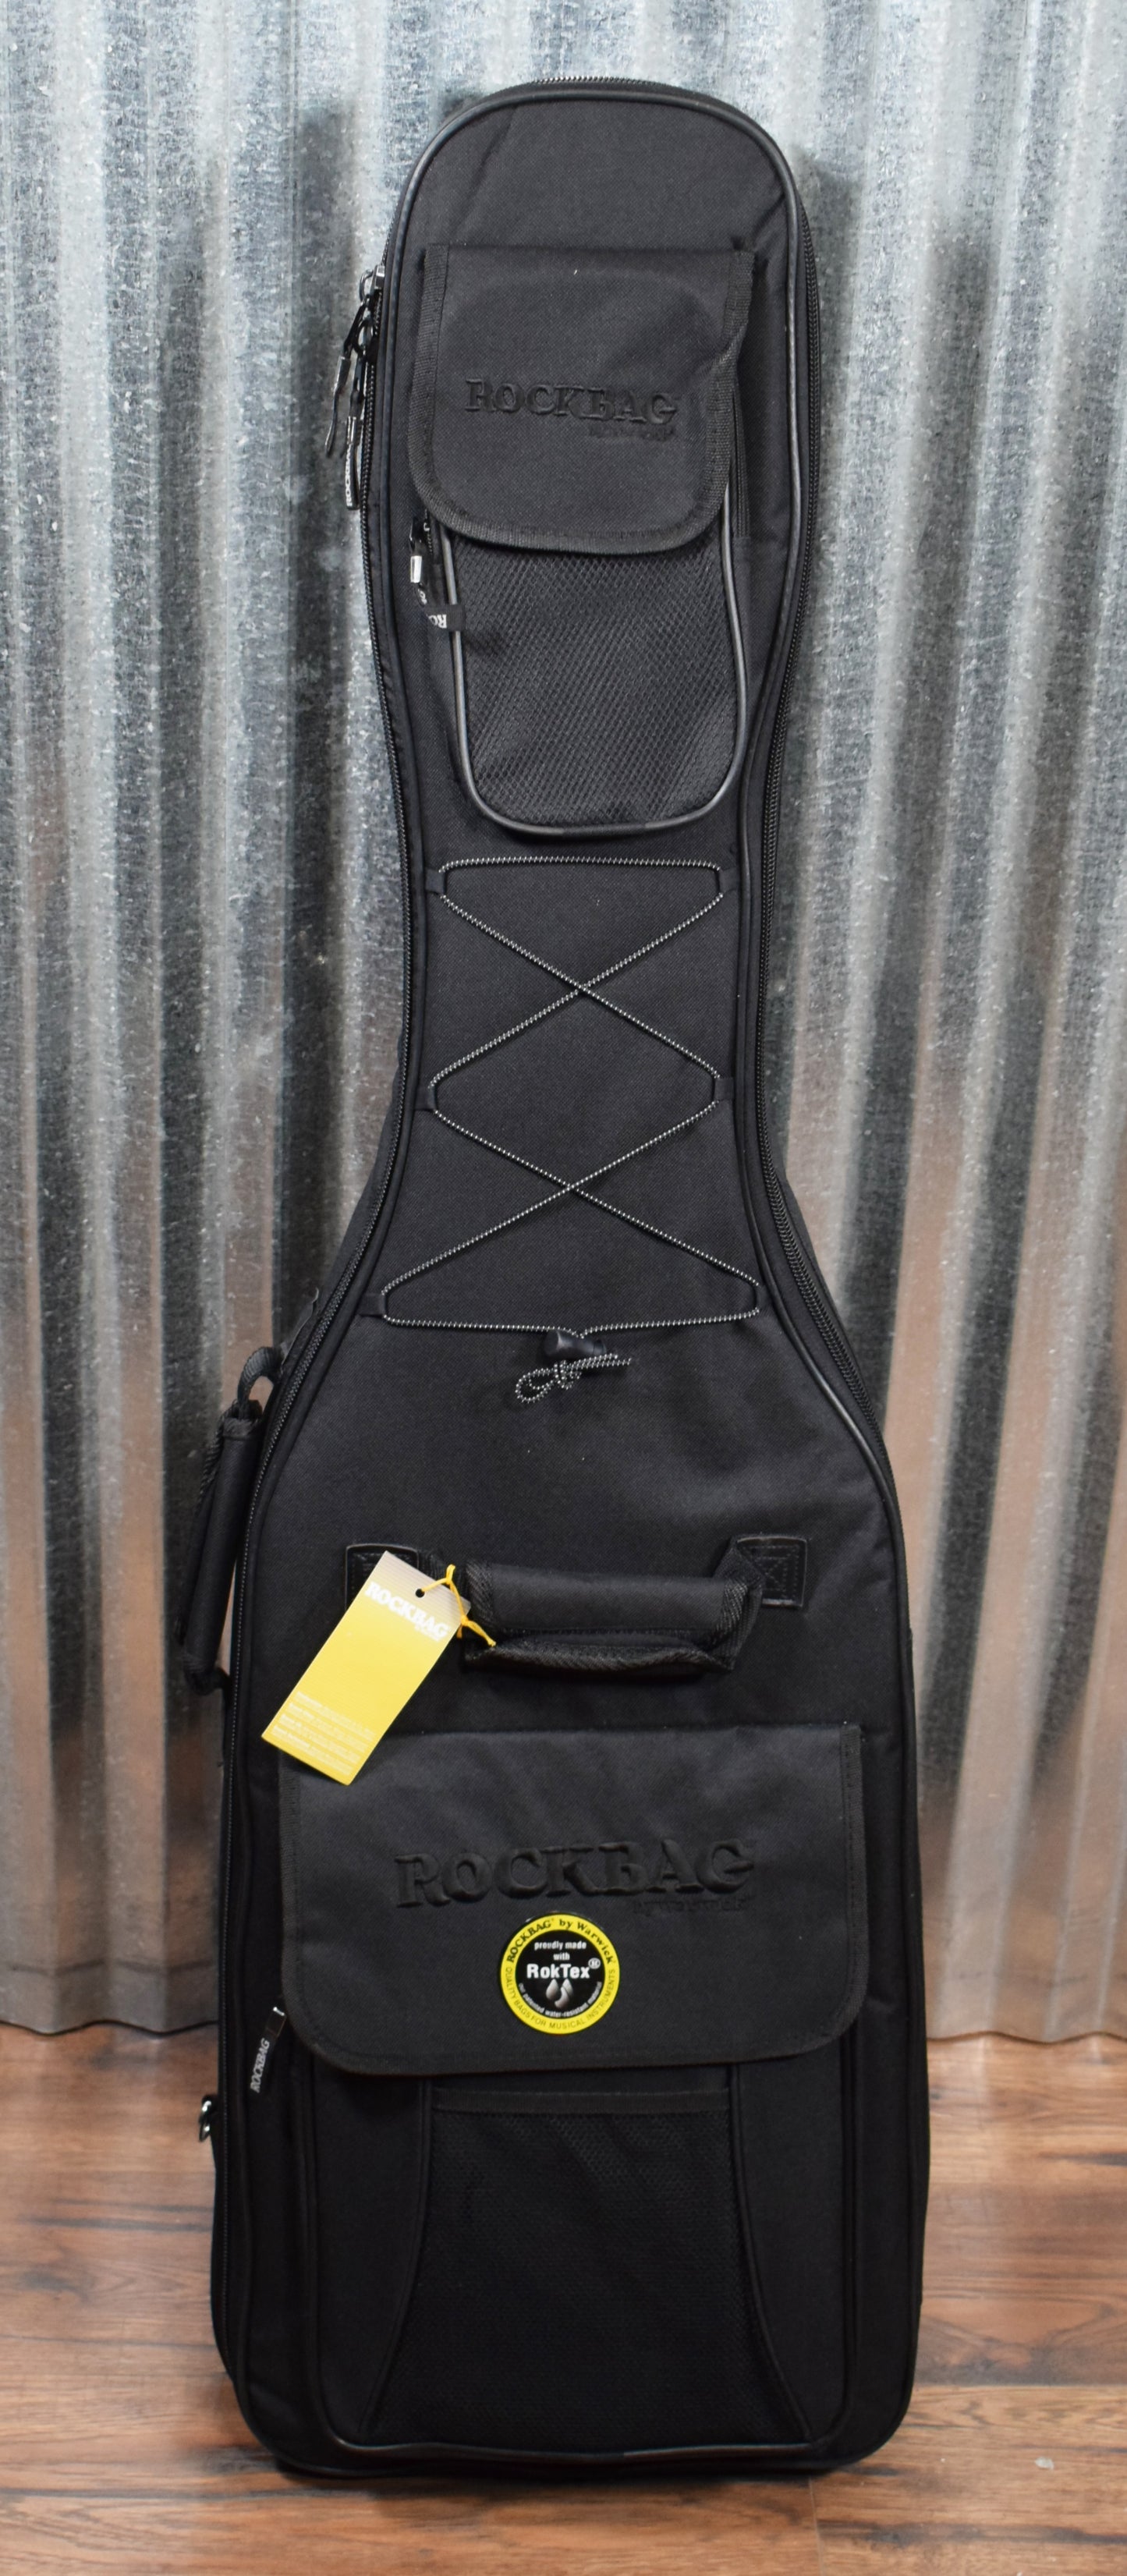 Warwick German Pro Series Corvette Standard Nirvana Black 5 String Bass & Bag #7819